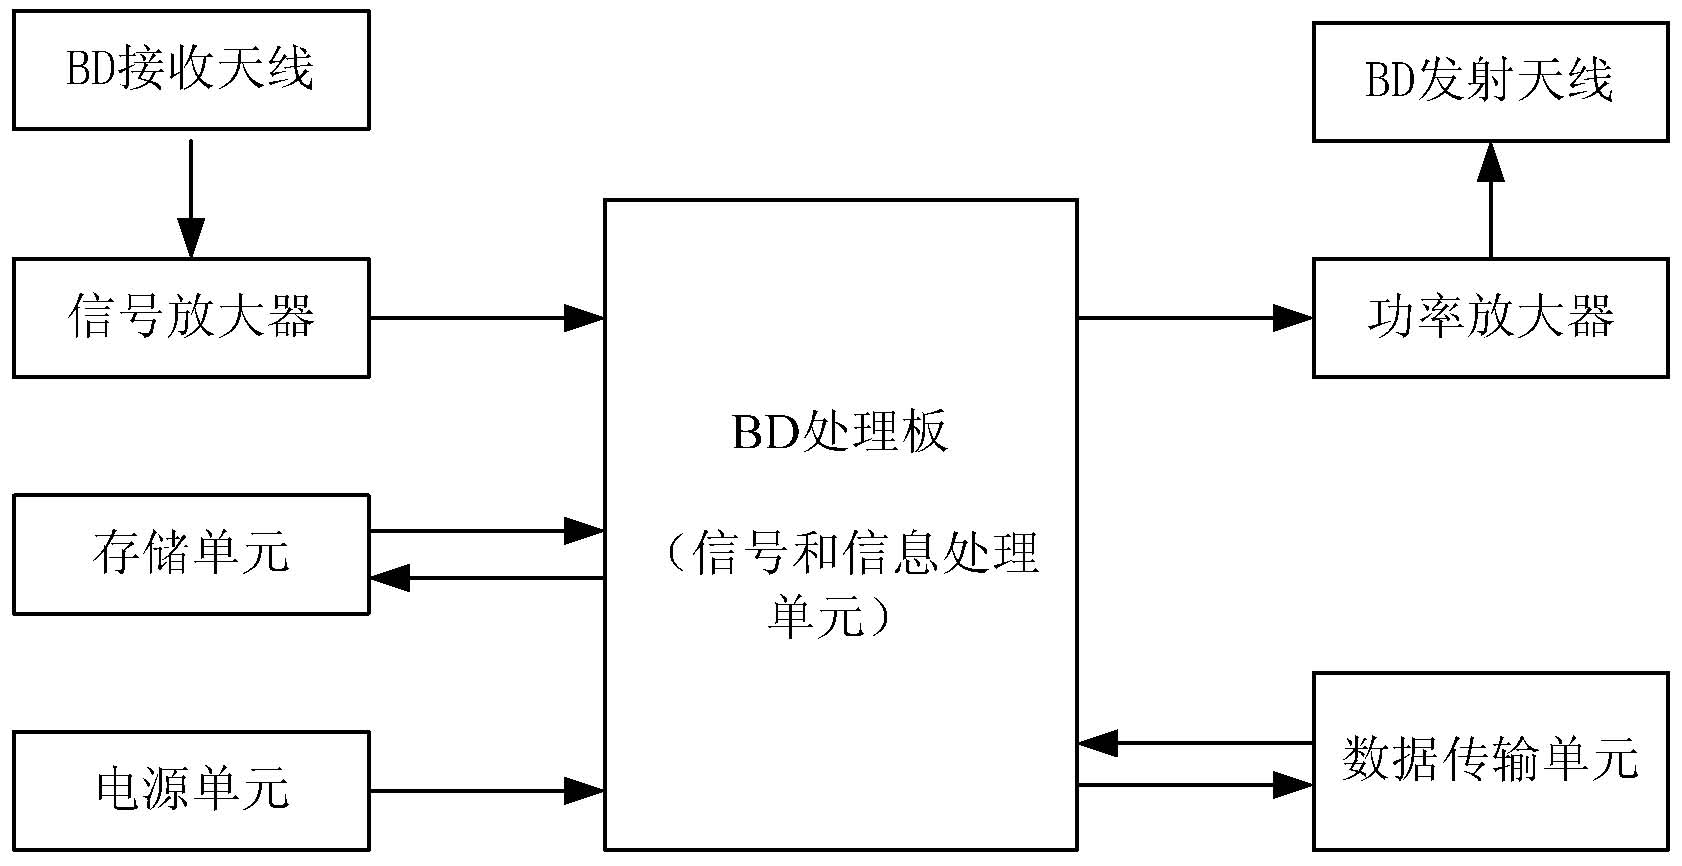 Field mobile positioning device based on backward diode (BD) communication